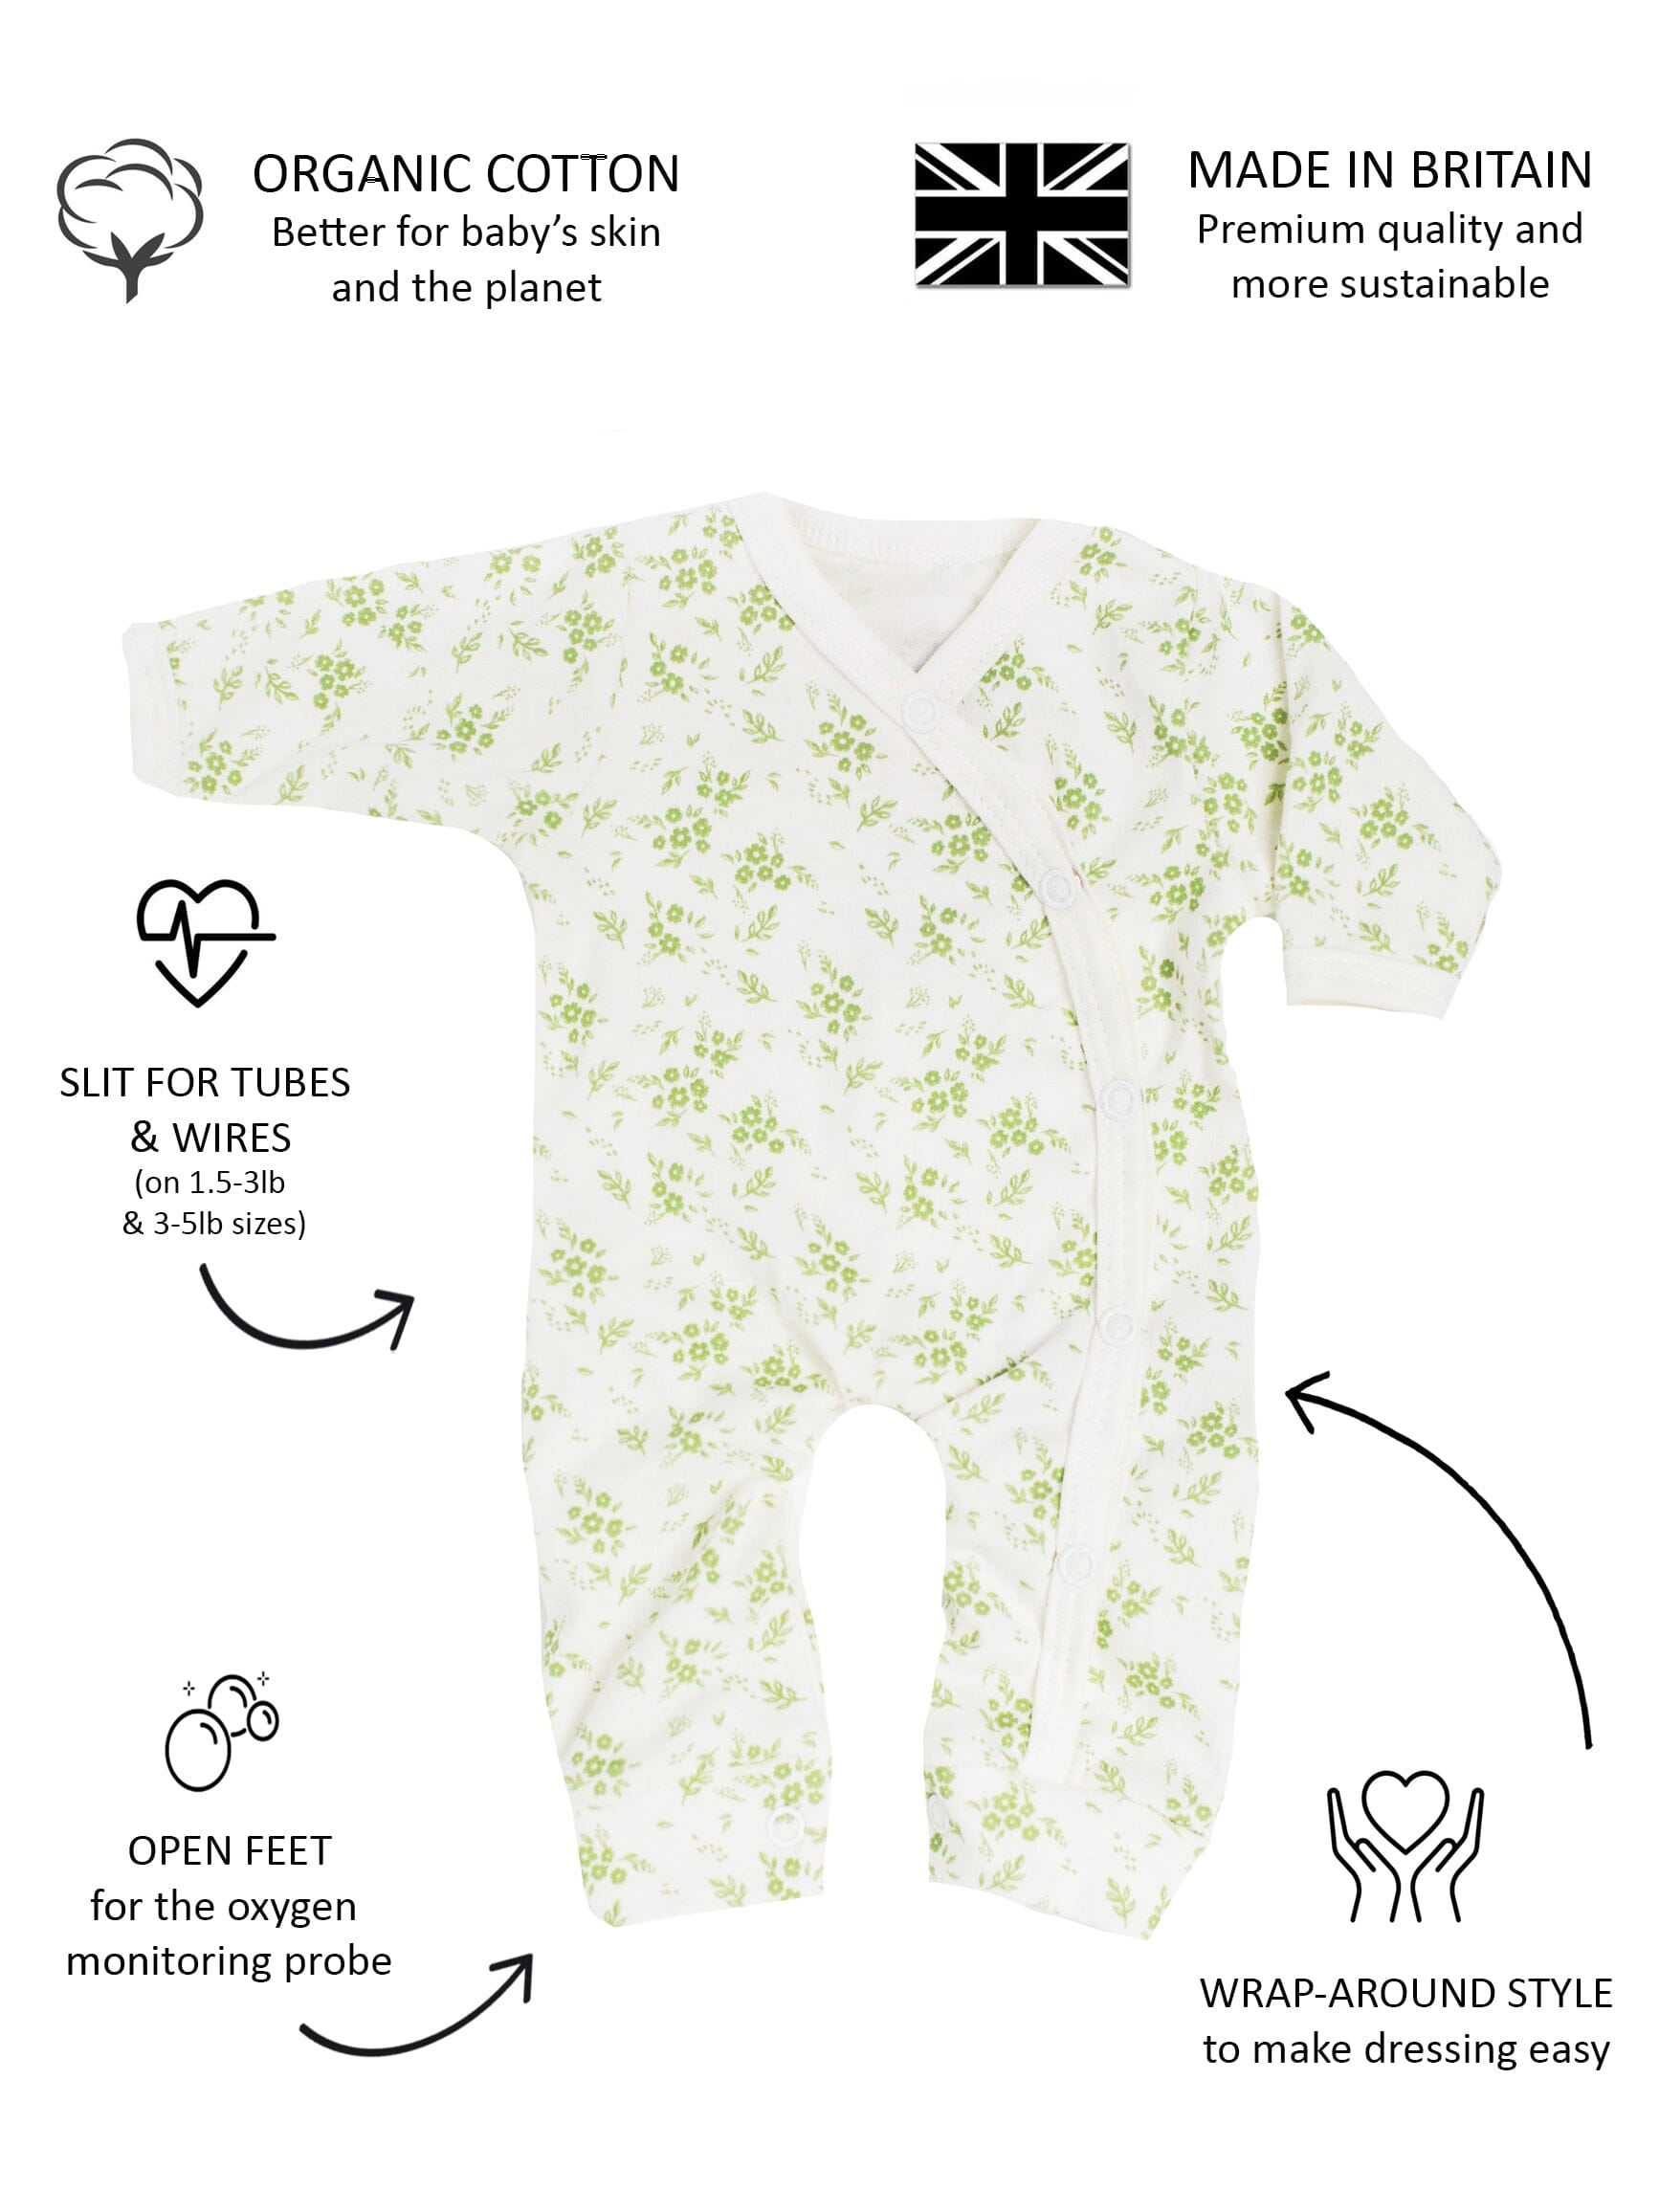 Preemie Girl Sleepsuit, Apple Floral, Premium 100% Organic Cotton - Sleepsuit / Babygrow - Tiny & Small